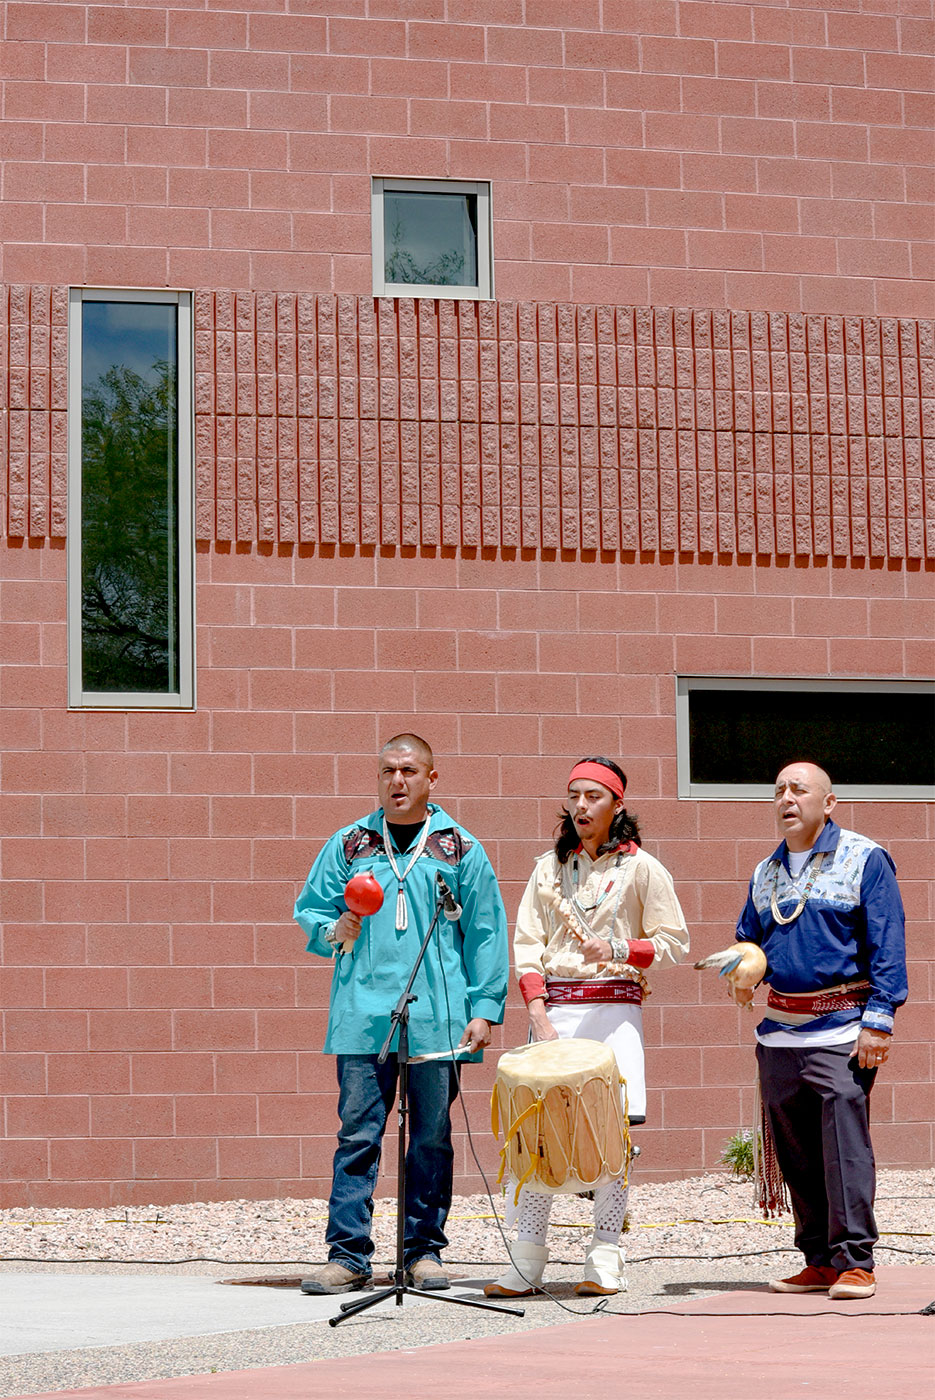 Ysleta del Sur Pueblo Dancers Visit the Two Waters Complex for a Daytime Performance